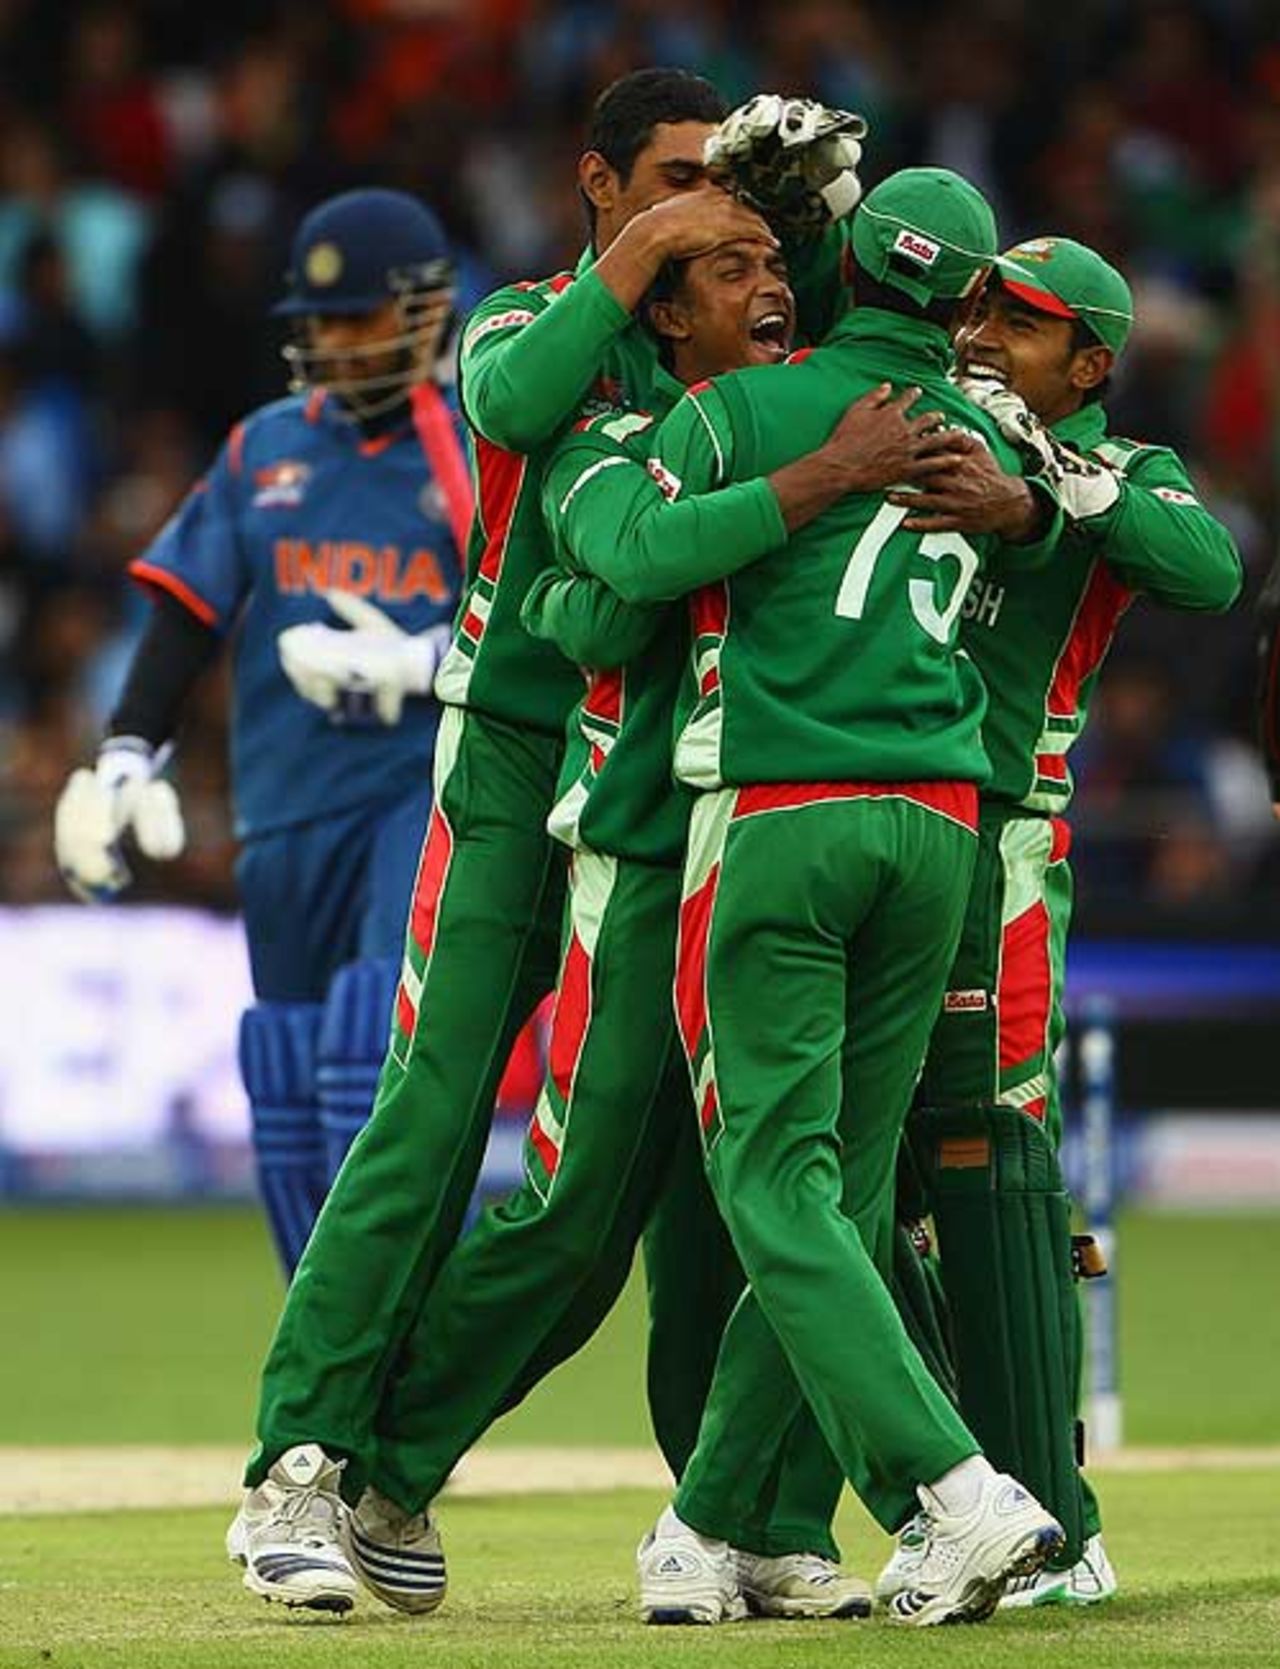 Naeem Islam is mobbed after bowling MS Dhoni, Bangladesh v India, ICC World Twenty20, Trent Bridge, June 6, 2009